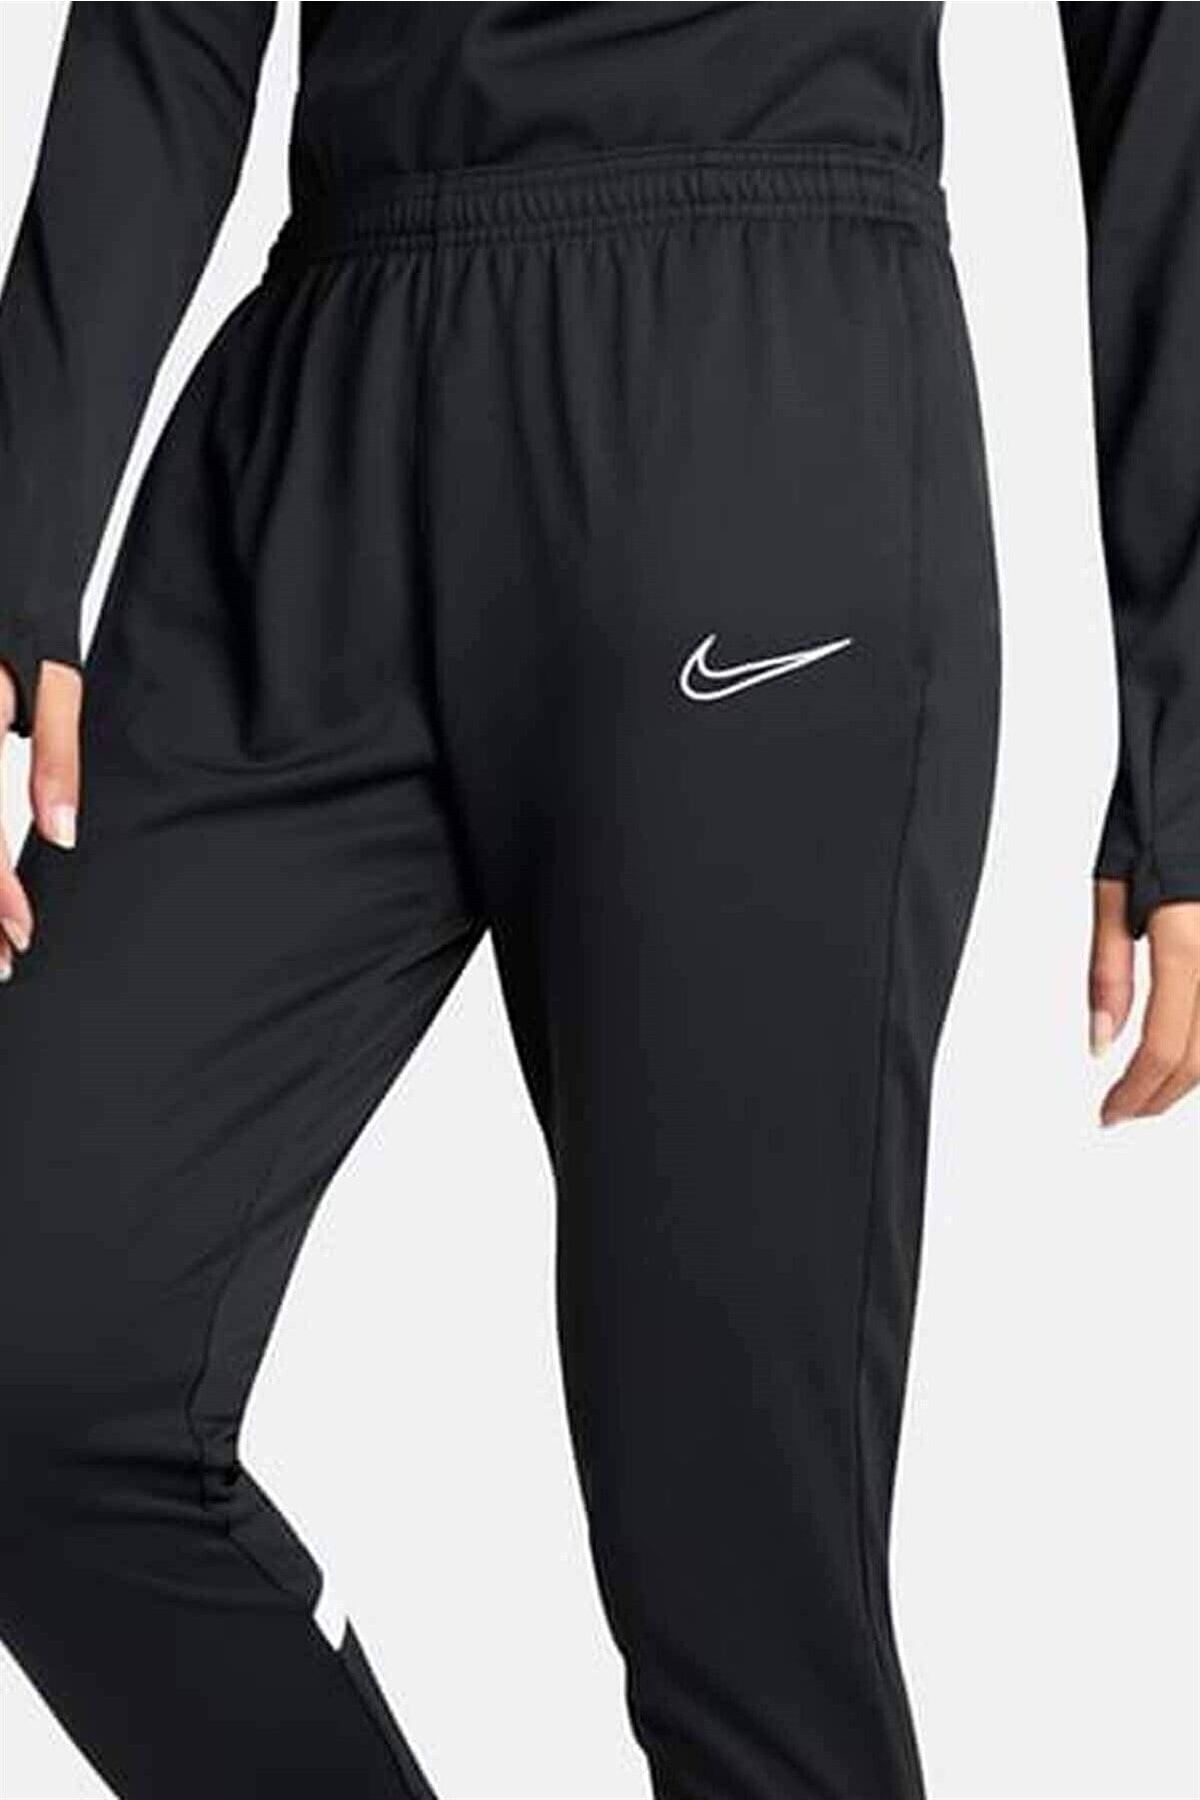 Nike W Dry Fit Academy Black Women's Sweatpants Cv2665-010 V1